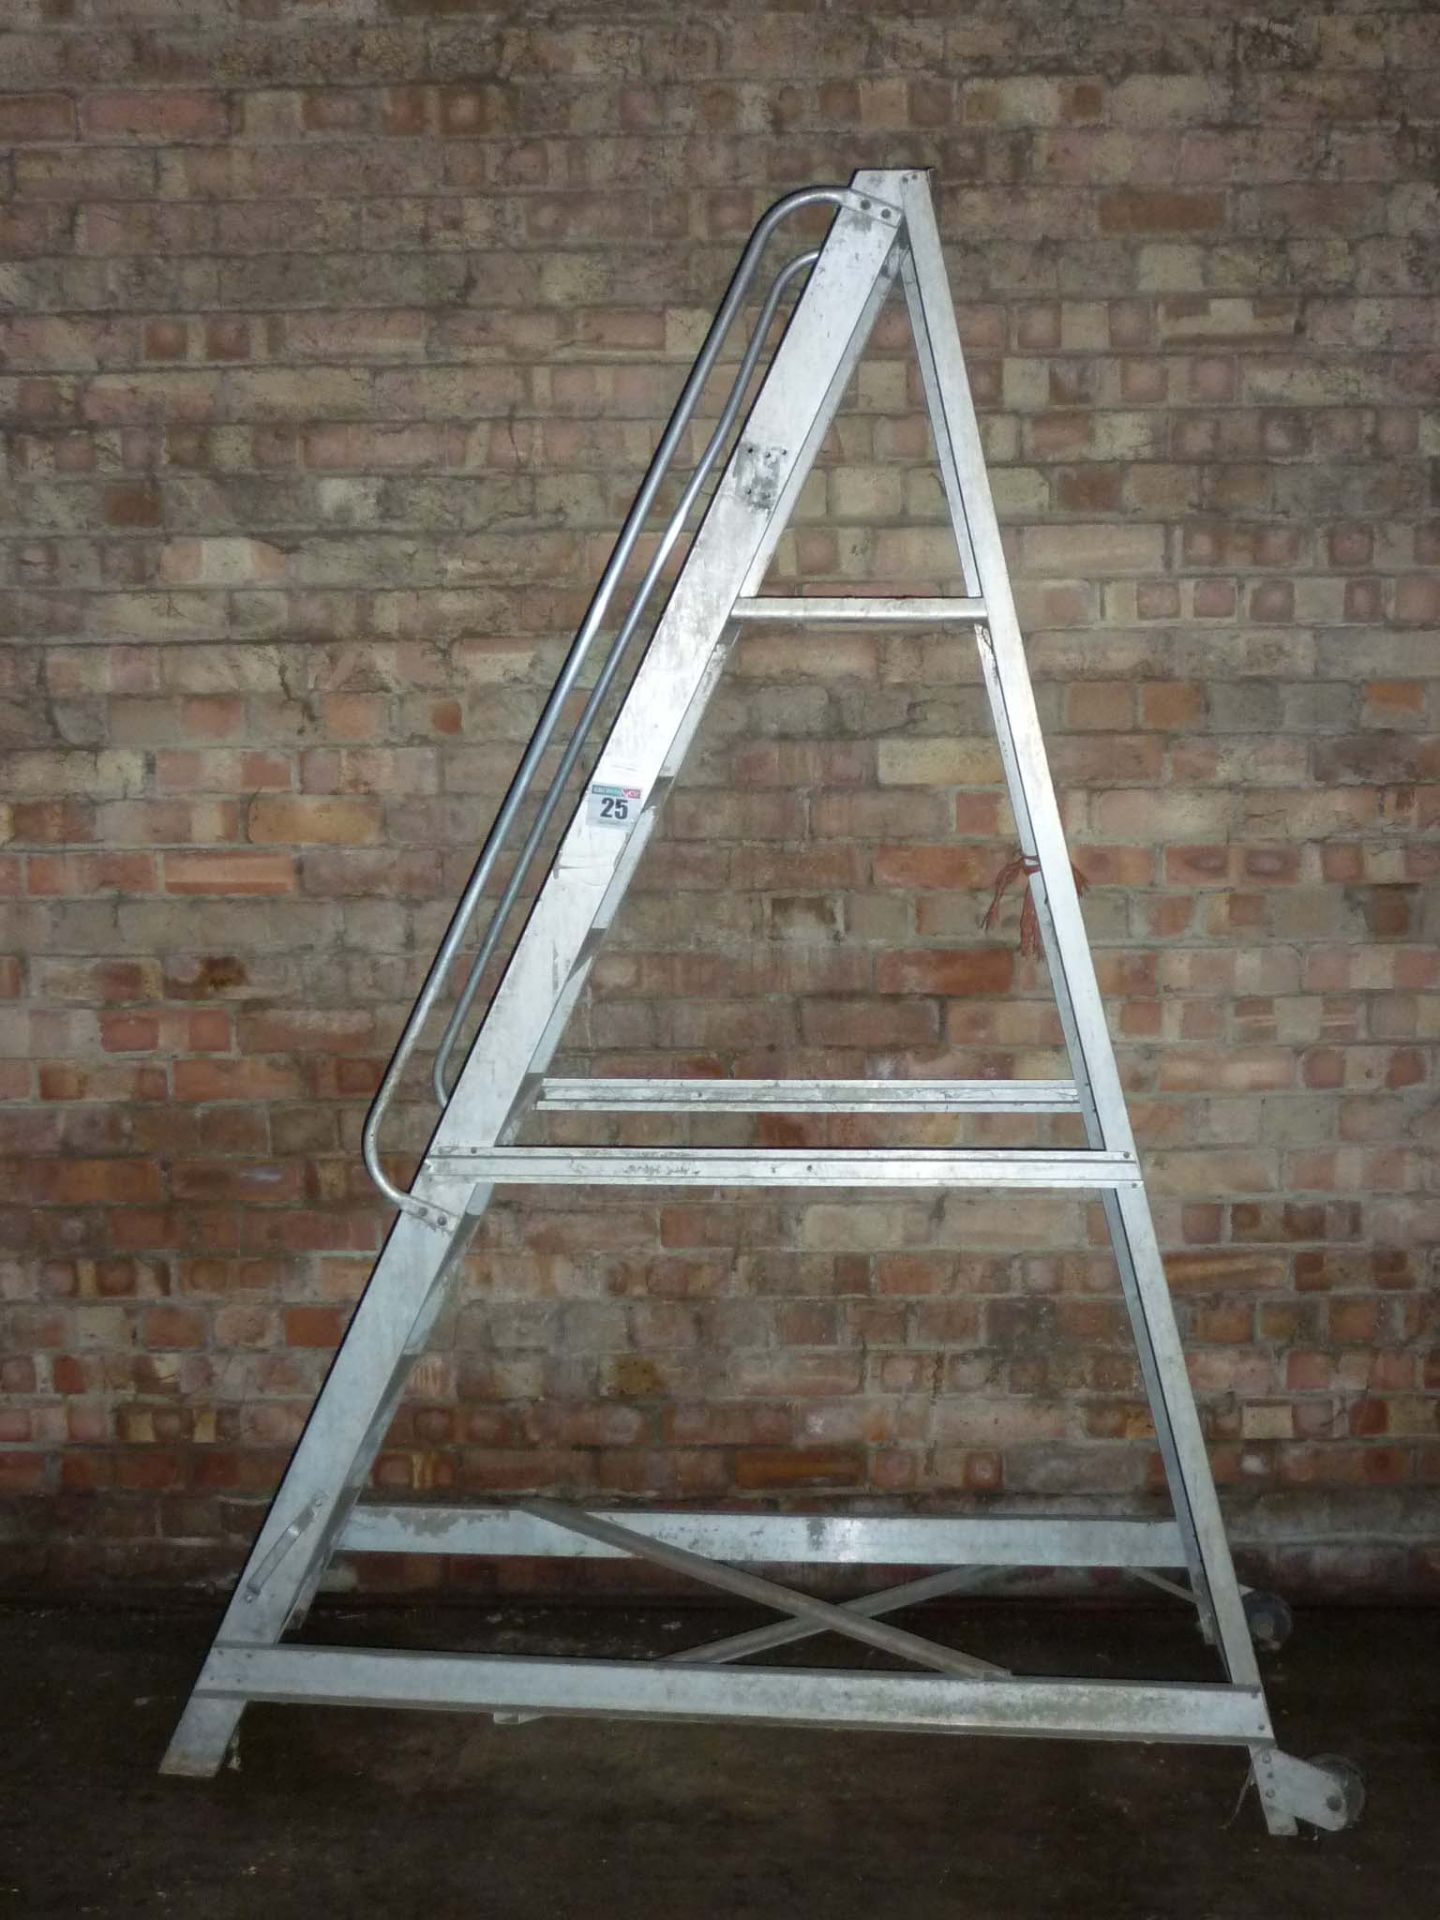 Frame mounted ladder on wheels